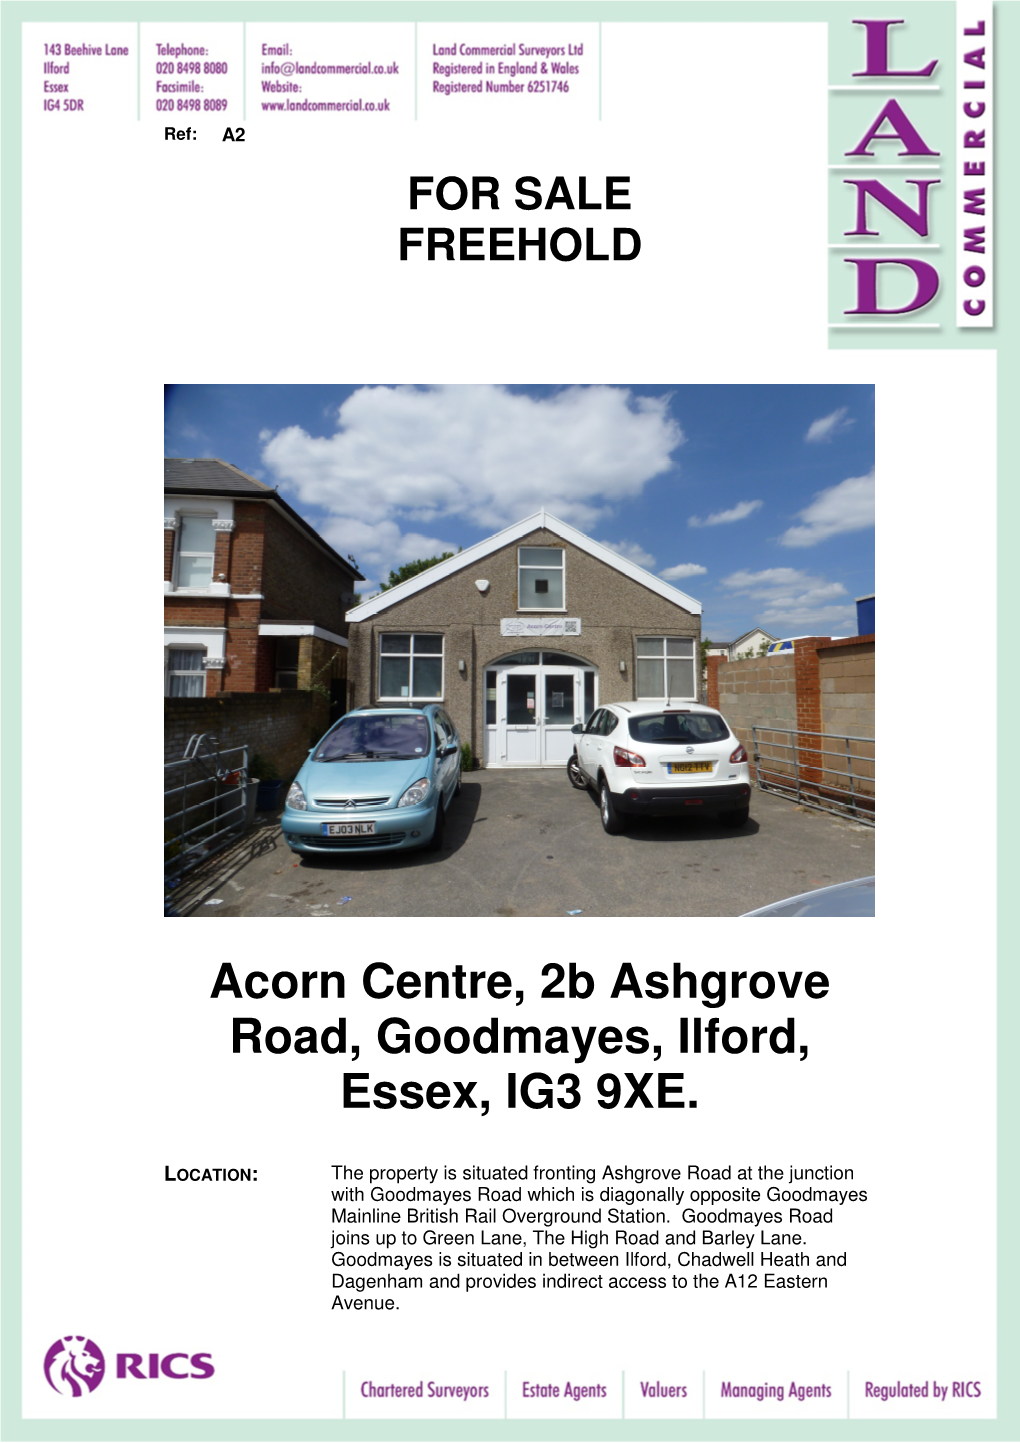 Acorn Centre, 2B Ashgrove Road, Goodmayes, Ilford, Essex, IG3 9XE